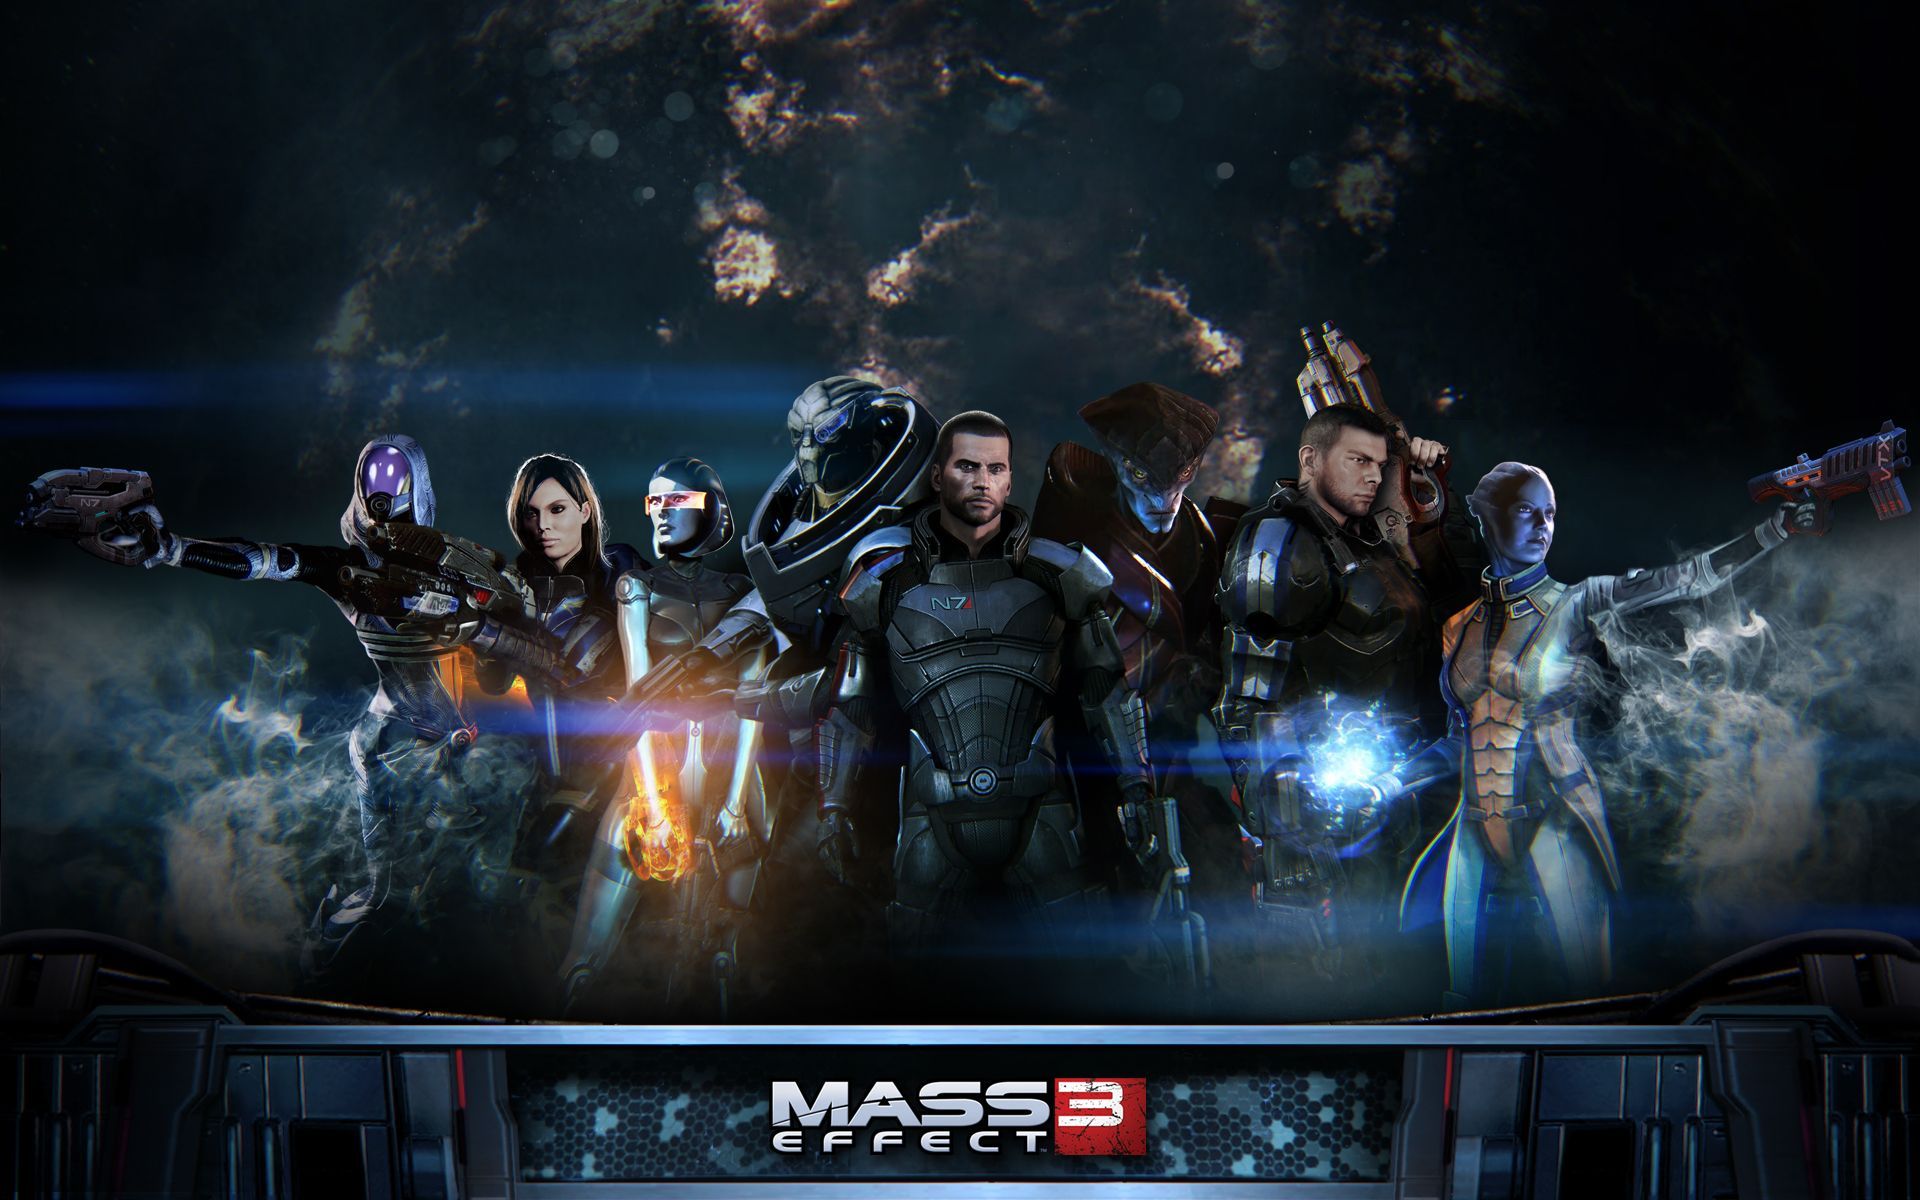 Mass Effect 3 Extended Cut Wallpapers | HD Wallpapers